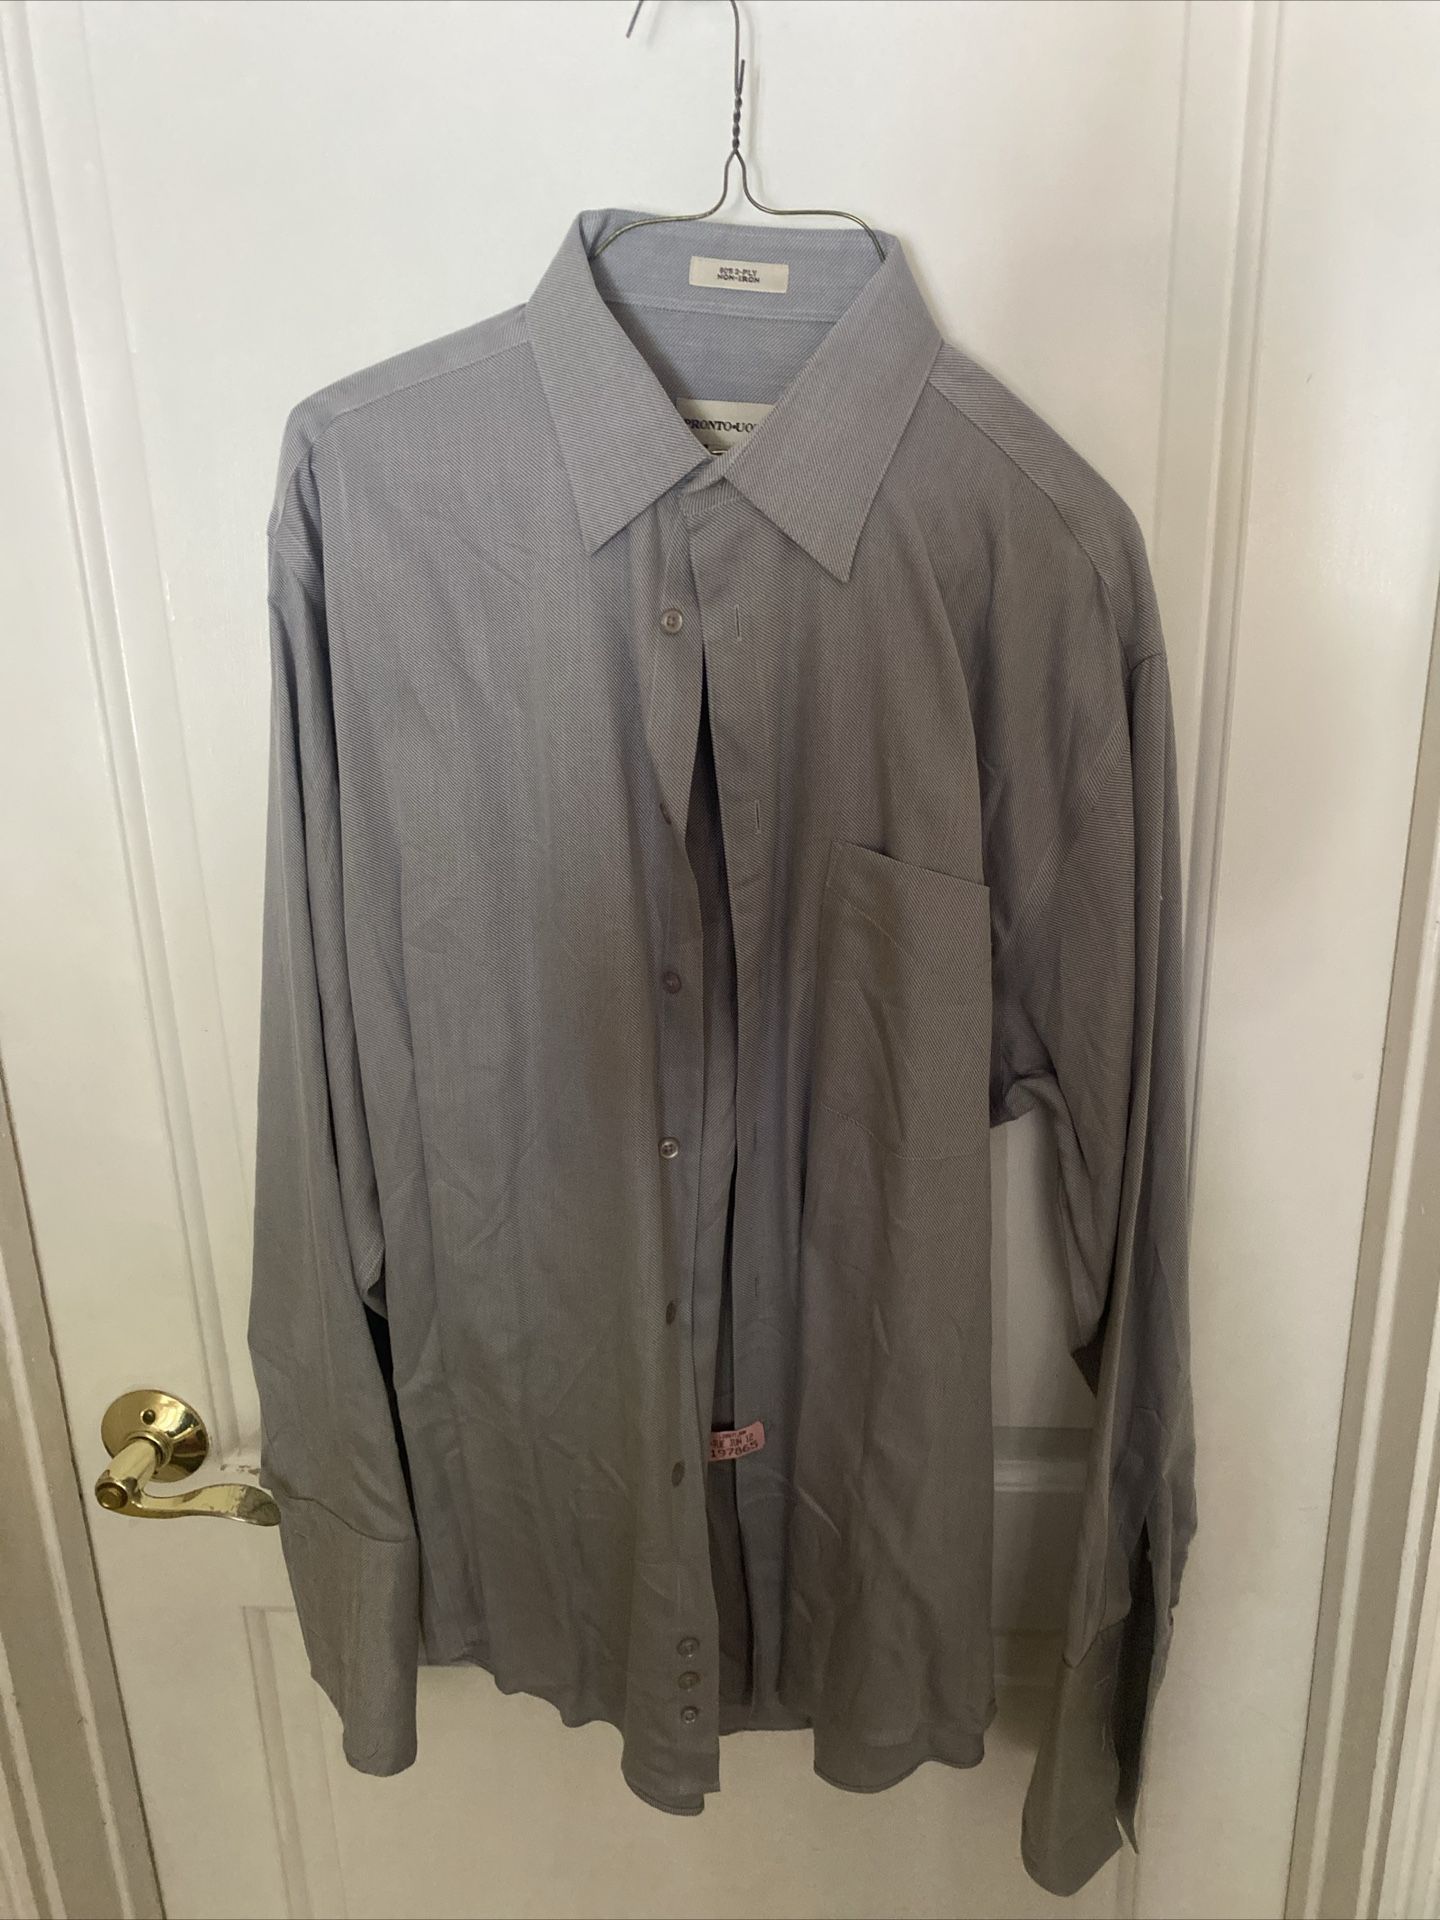 Mens Pronto Uomo Non Iron Classic Fit Gray  Checkered Dress Shirt Sz 16 1/2.